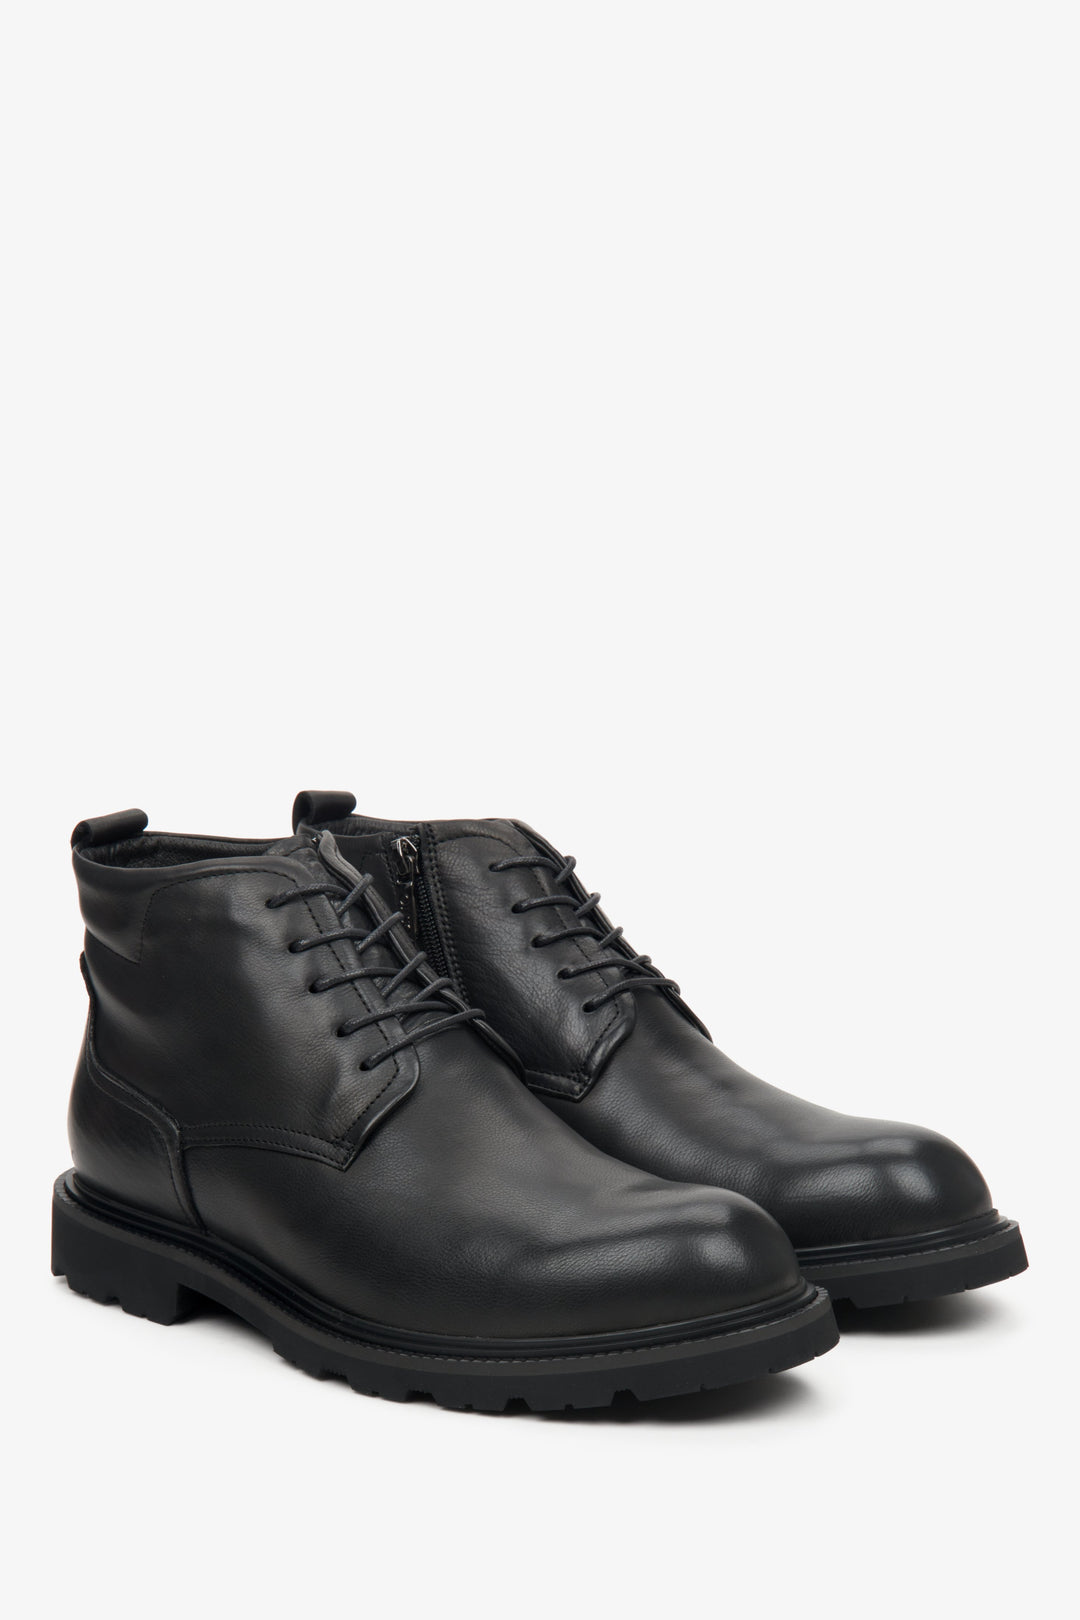 Men's black leather winter boots by Estro.